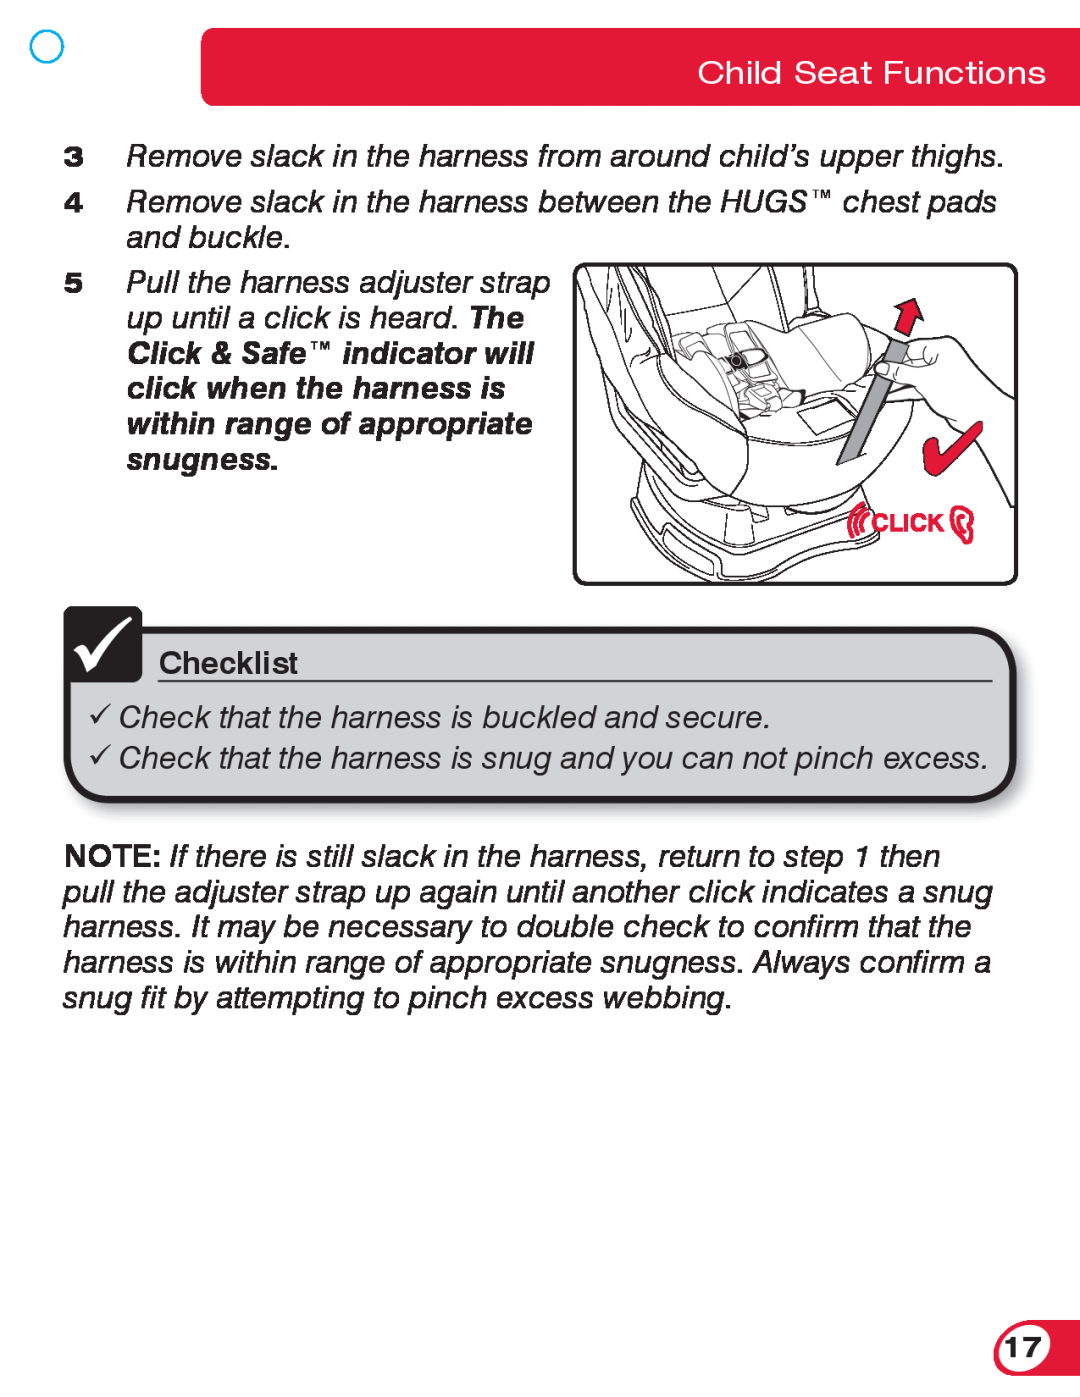 Britax 70 CS manual Checklist, Child Seat Functions 